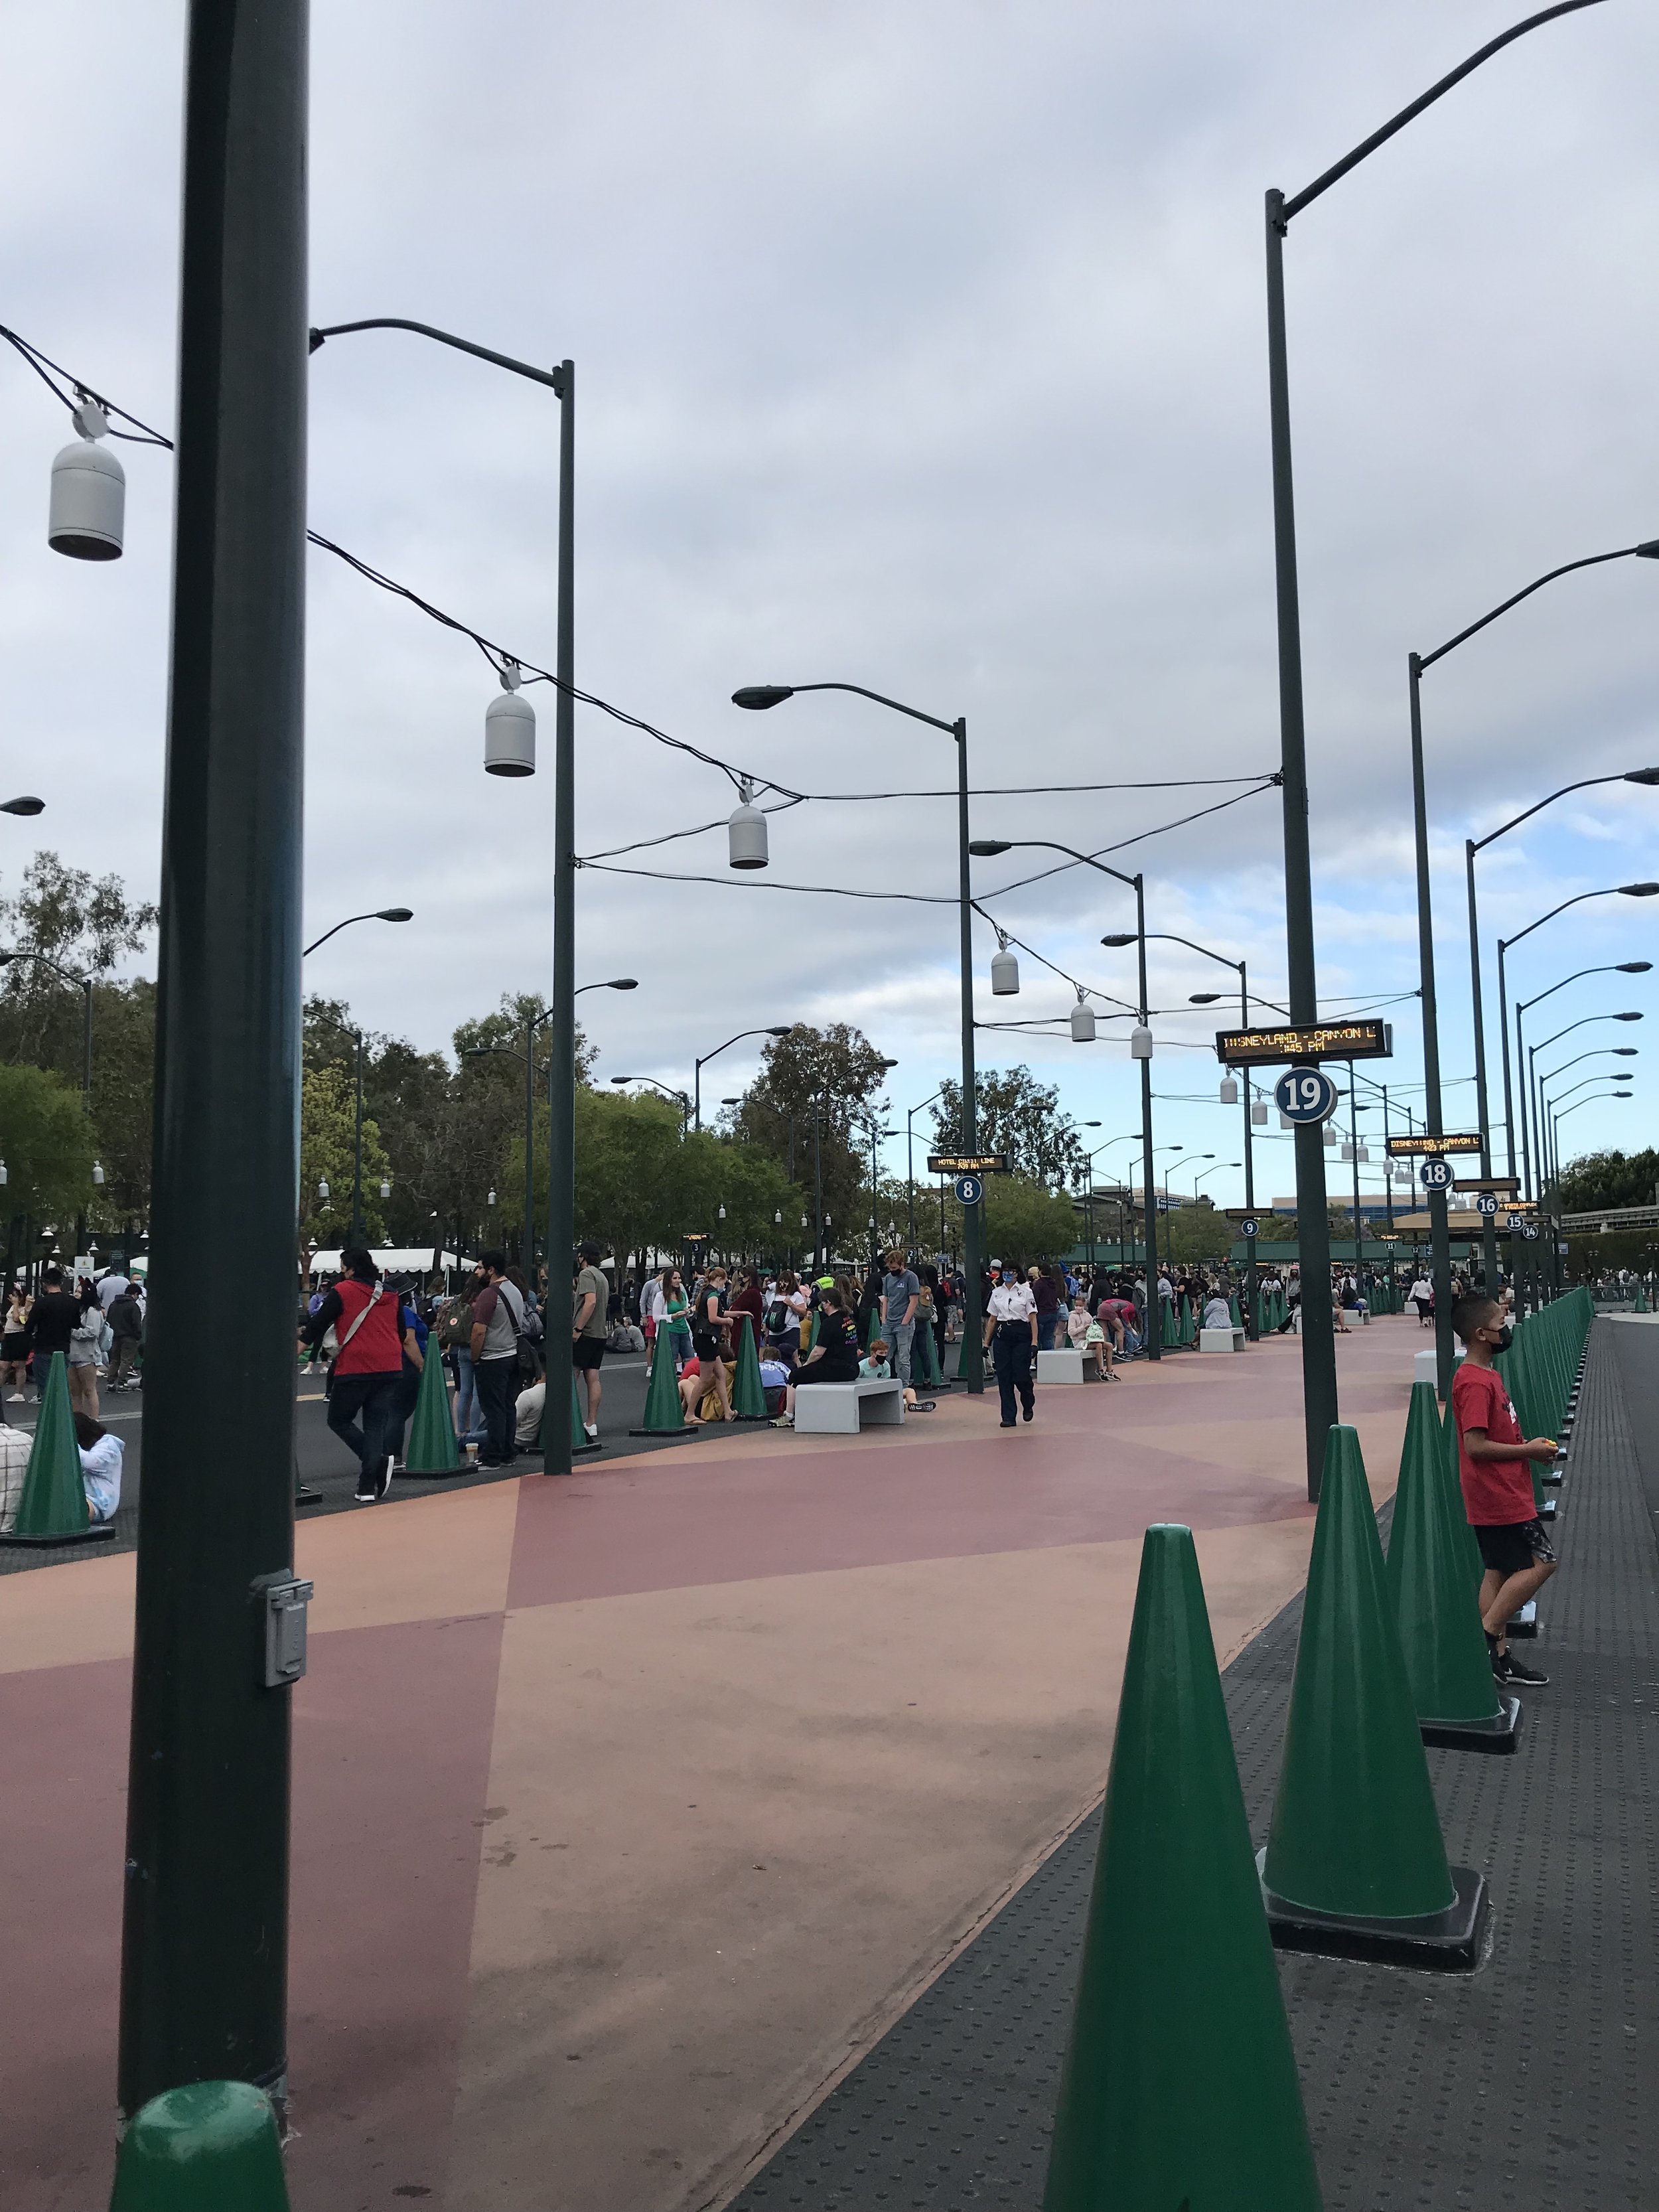  Long lines of people in the Disneyland bus depot 